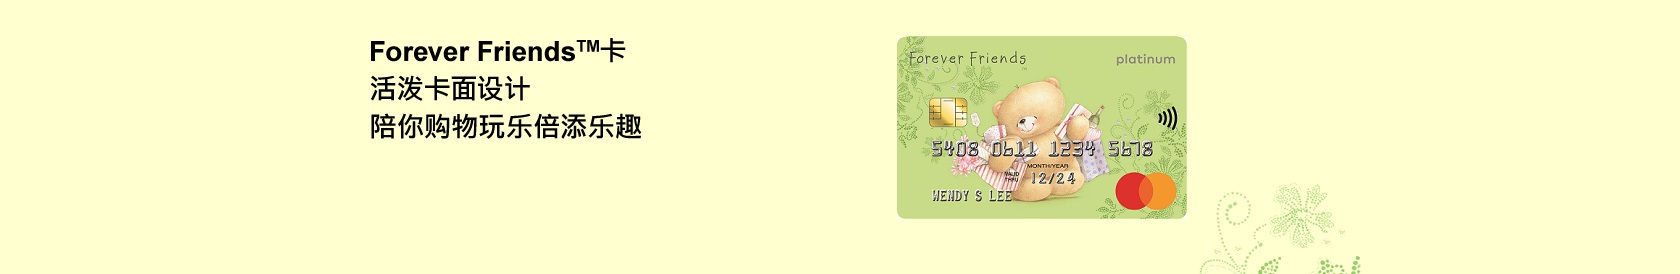 恒生卡类产品 - Forever Friends 卡